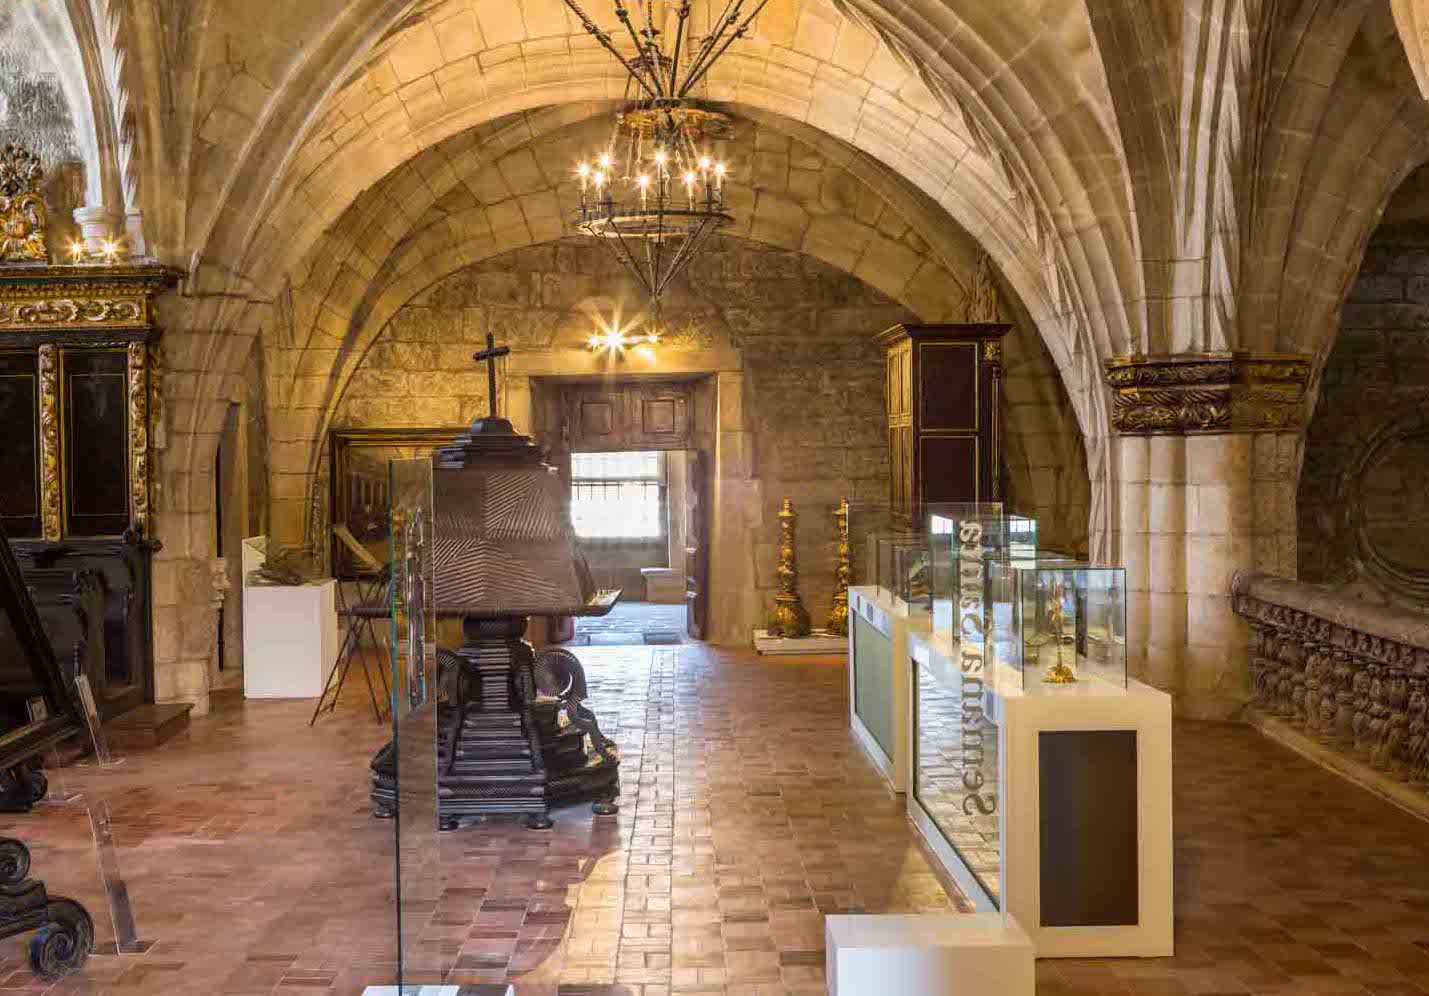 Catedral de Viseu e Museu “Tesouro da Catedral”